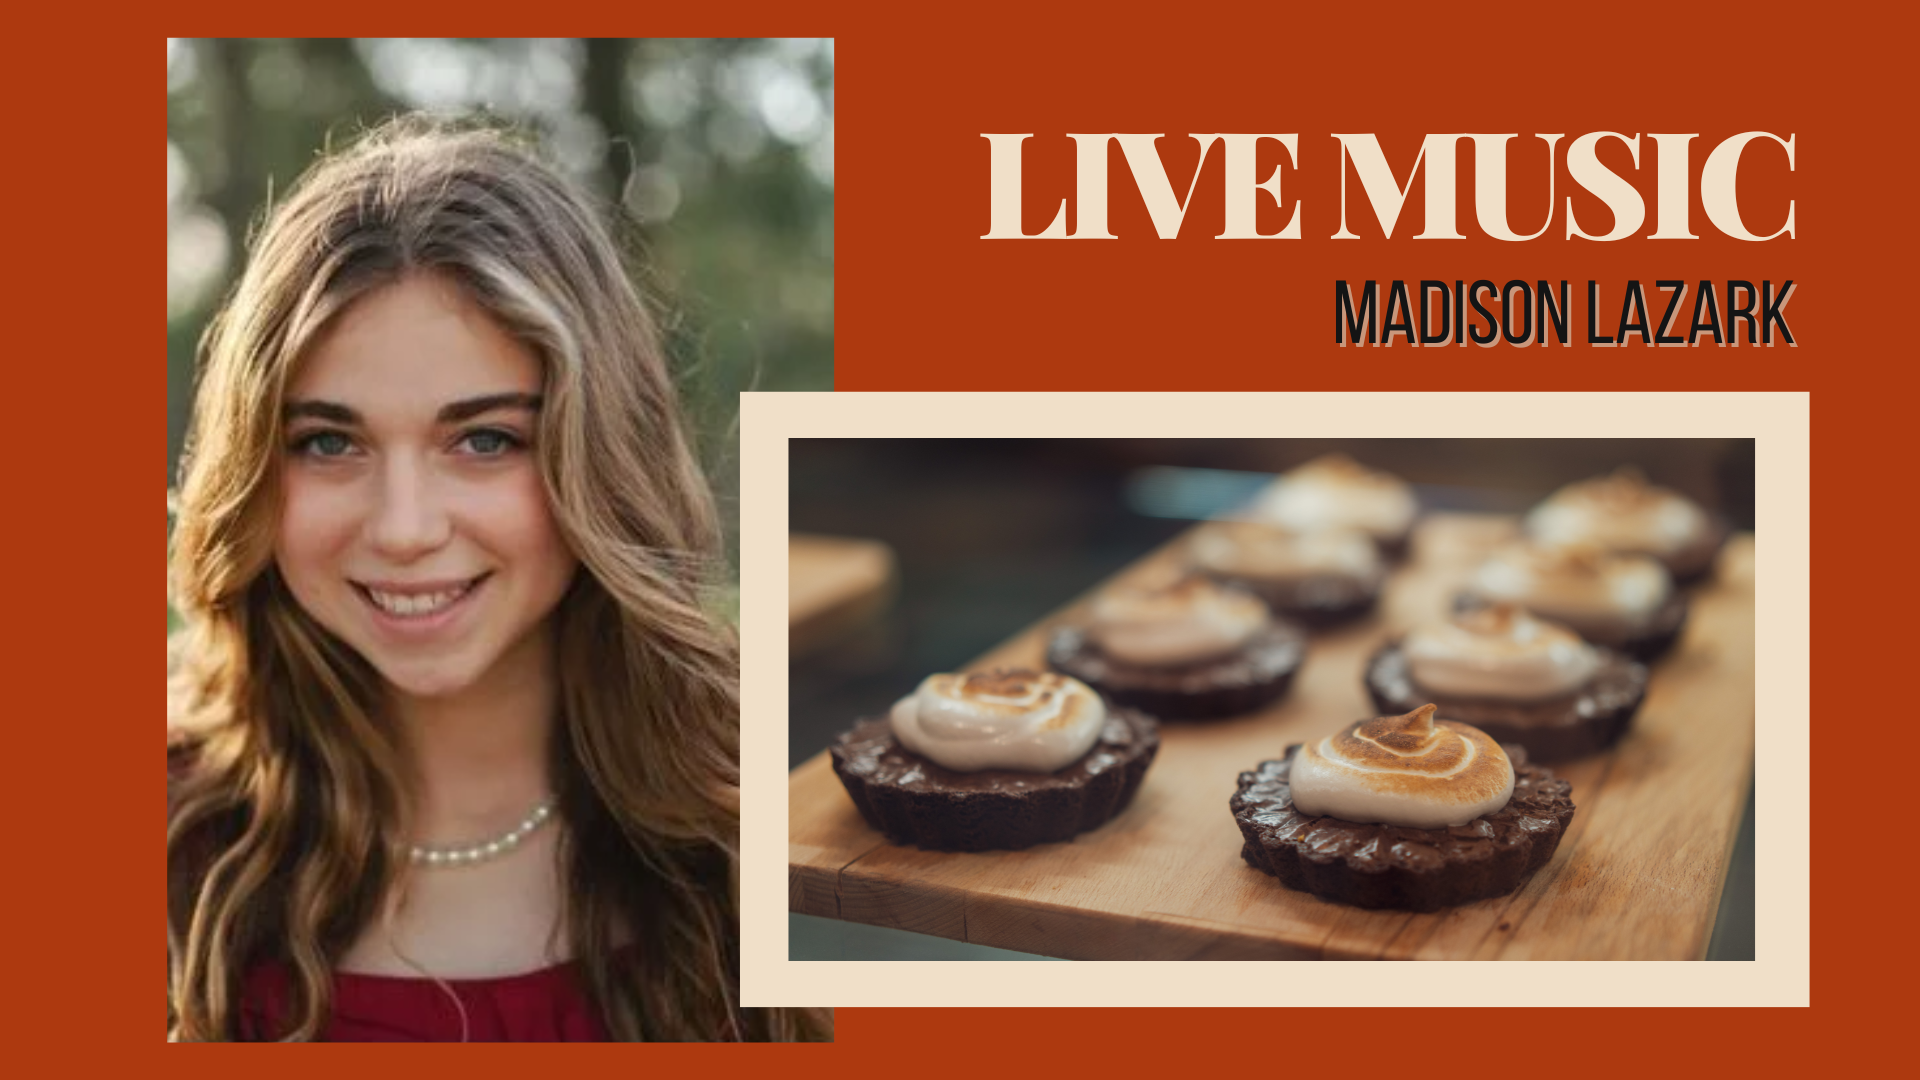 Live Music featuring Madison Lazark